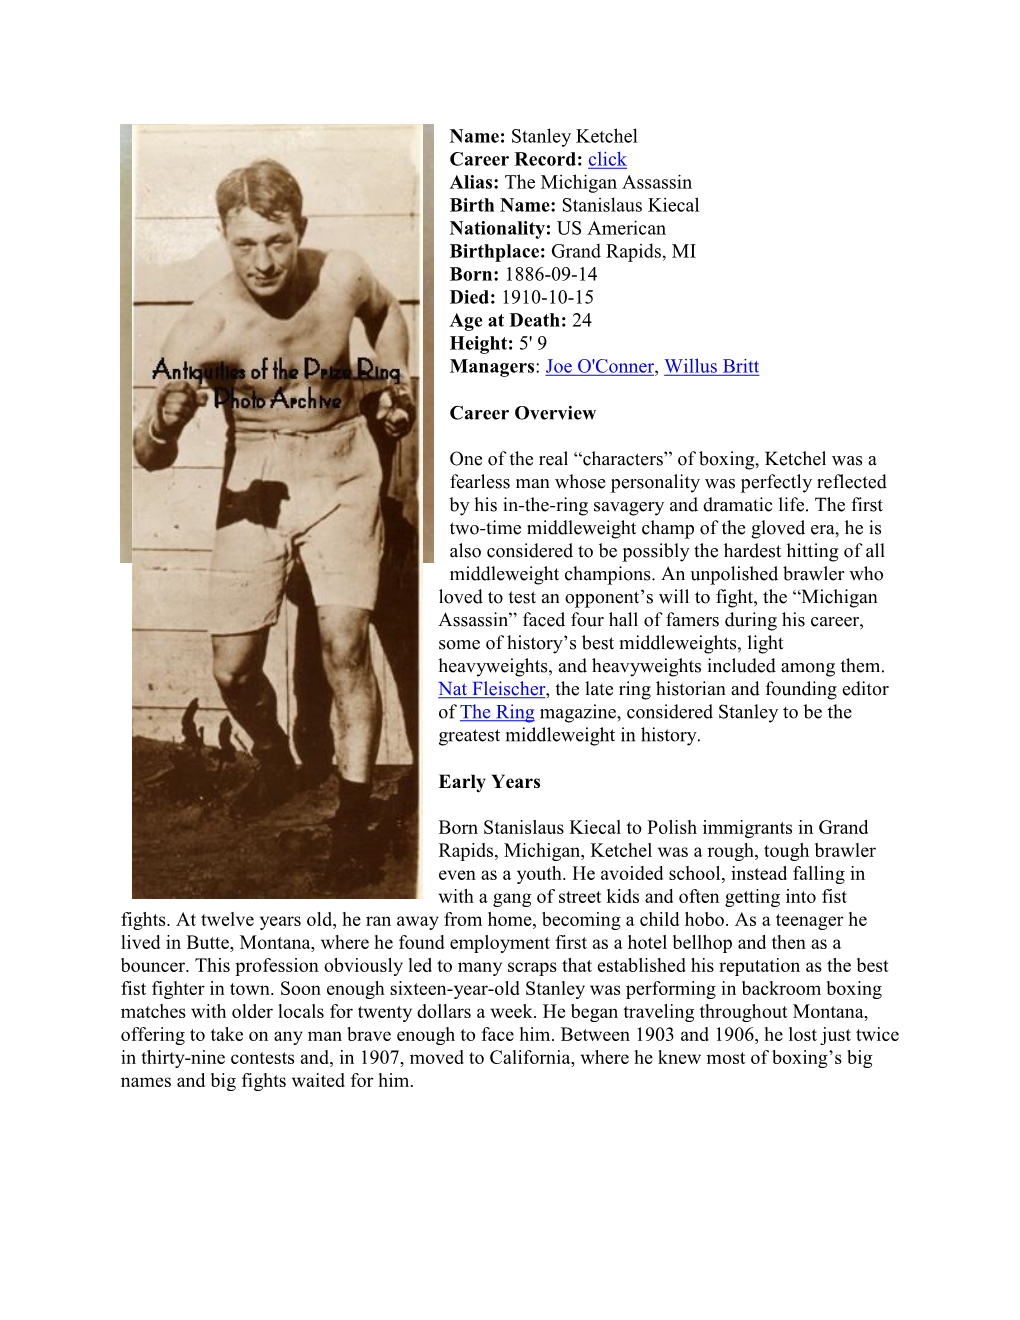 Name: Stanley Ketchel Career Record: Click Alias: the Michigan Assassin